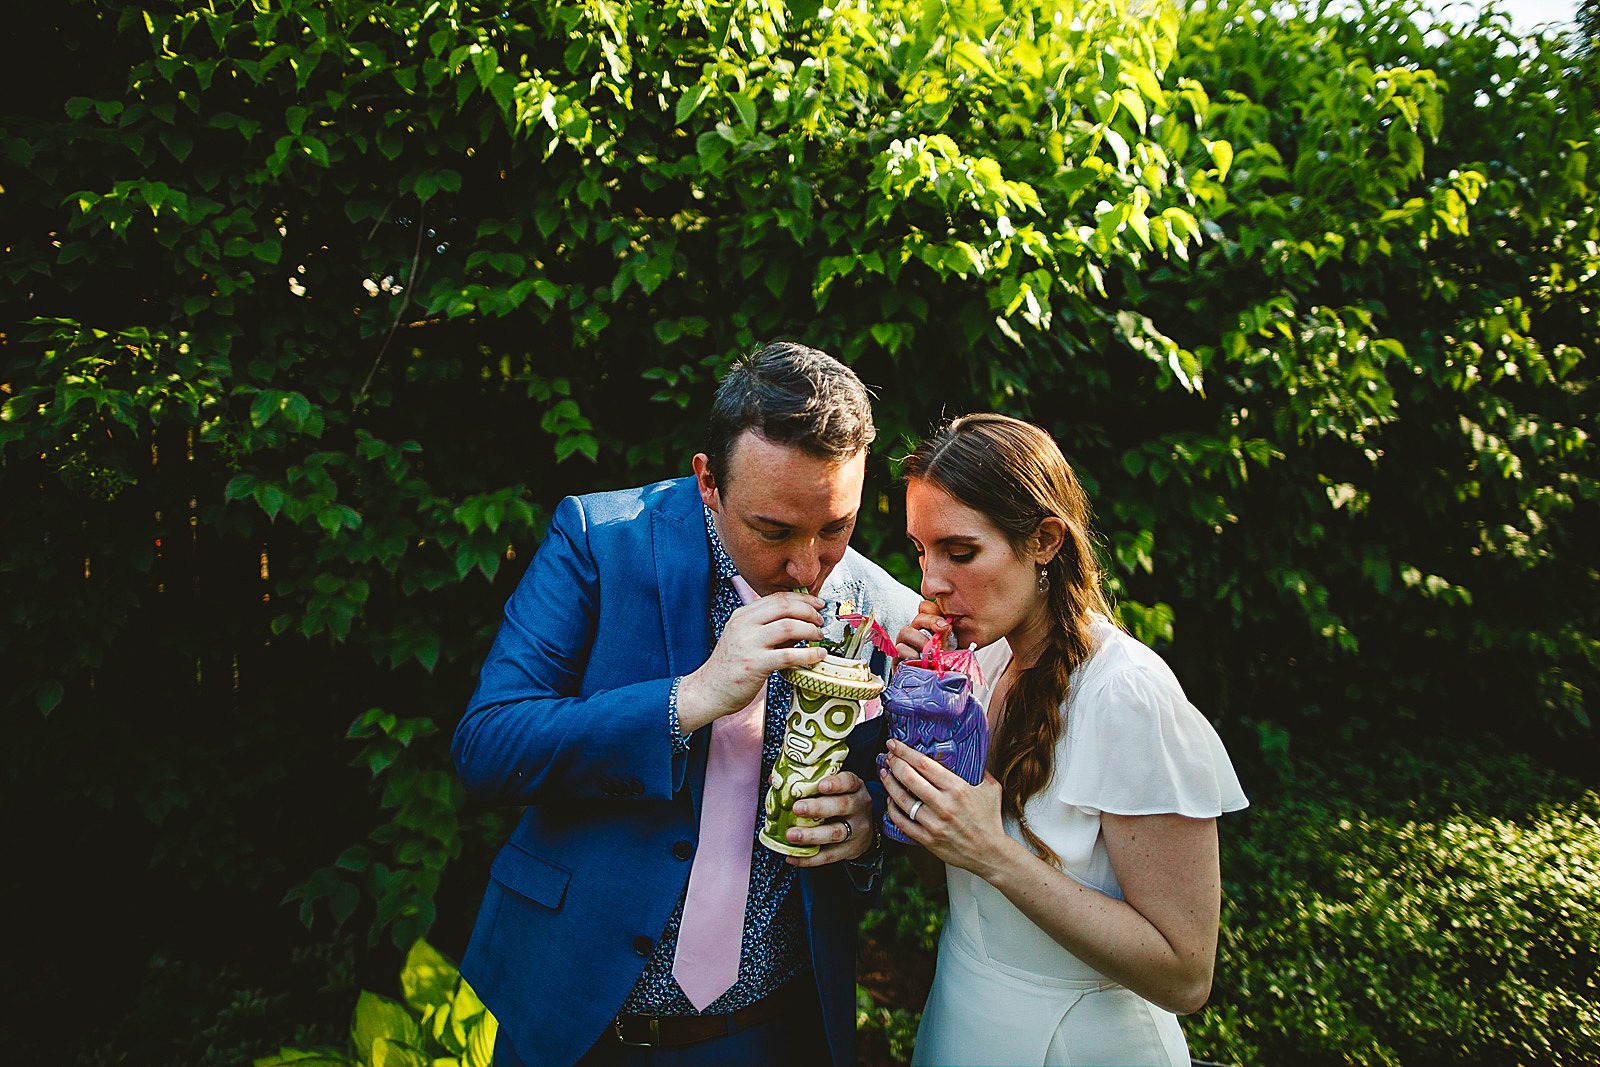 25 bride and groom enjoying drinks at their back yard wedding - Amazing Wedding in Backyard // Kristen + Jeff